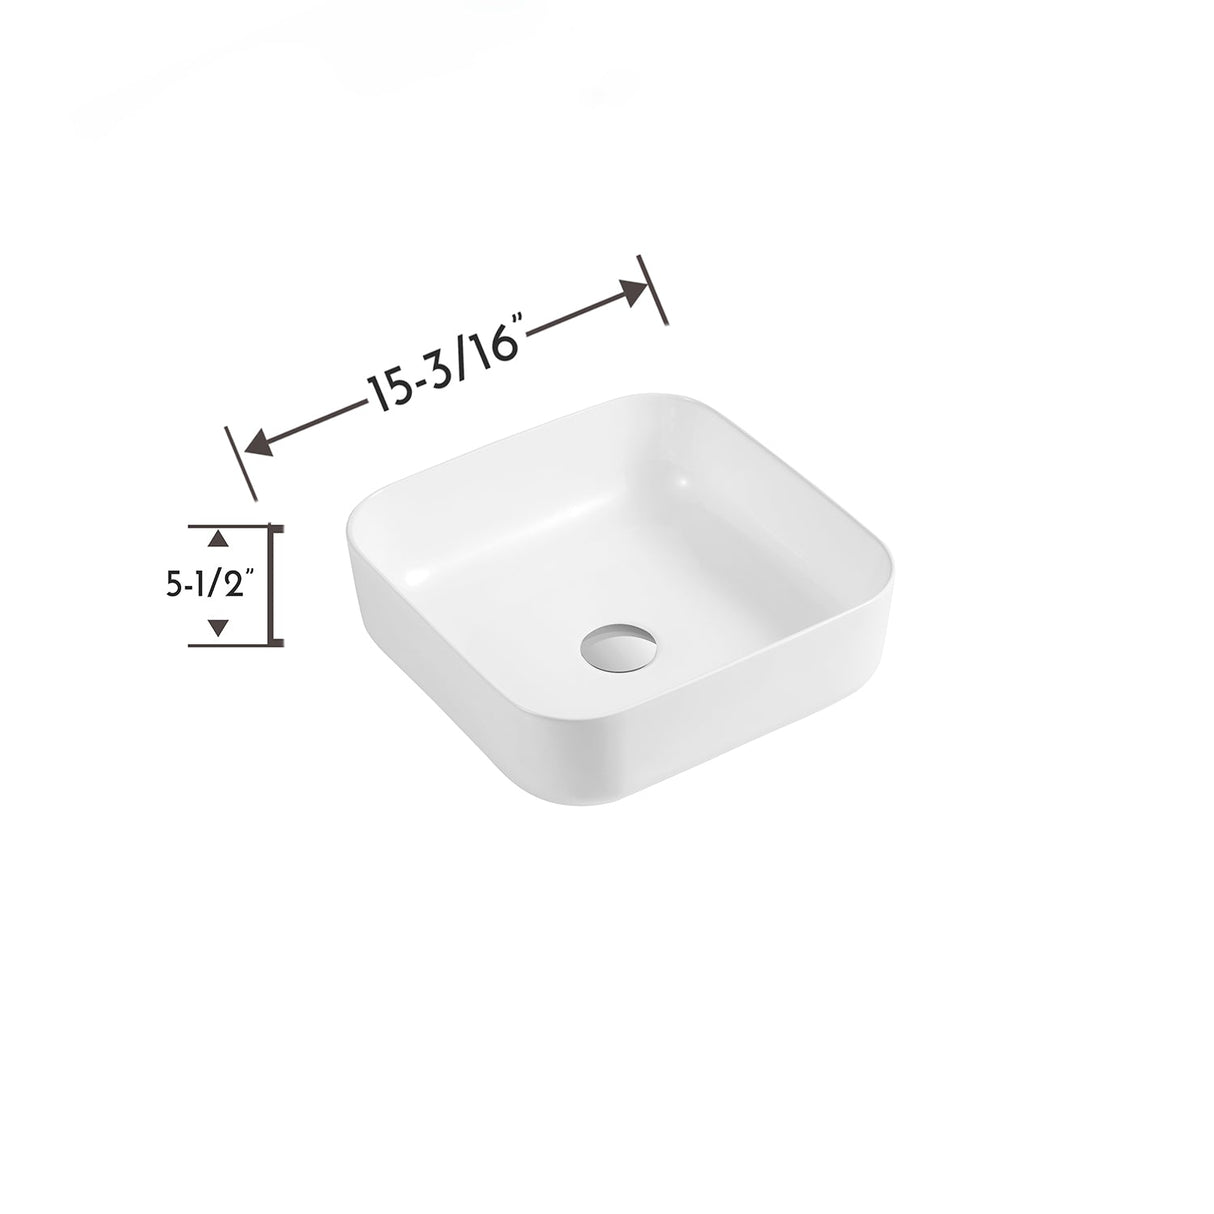 DAX Ceramic Square Bathroom Vessel Basin, 15", White Glossy DAX-CL1282-WG